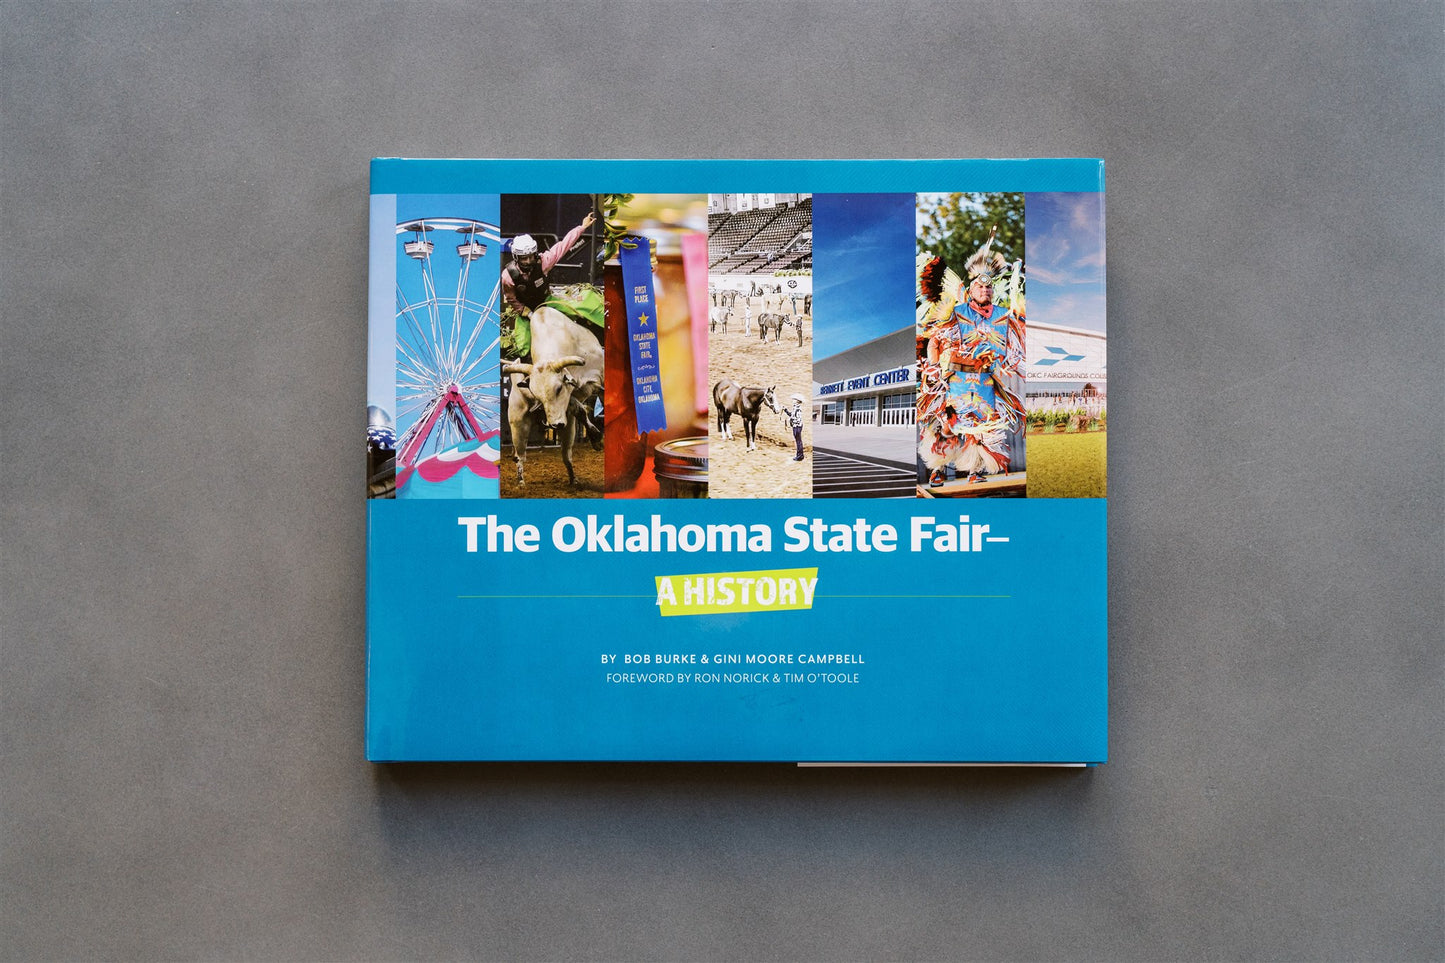 The Oklahoma State Fair: A History